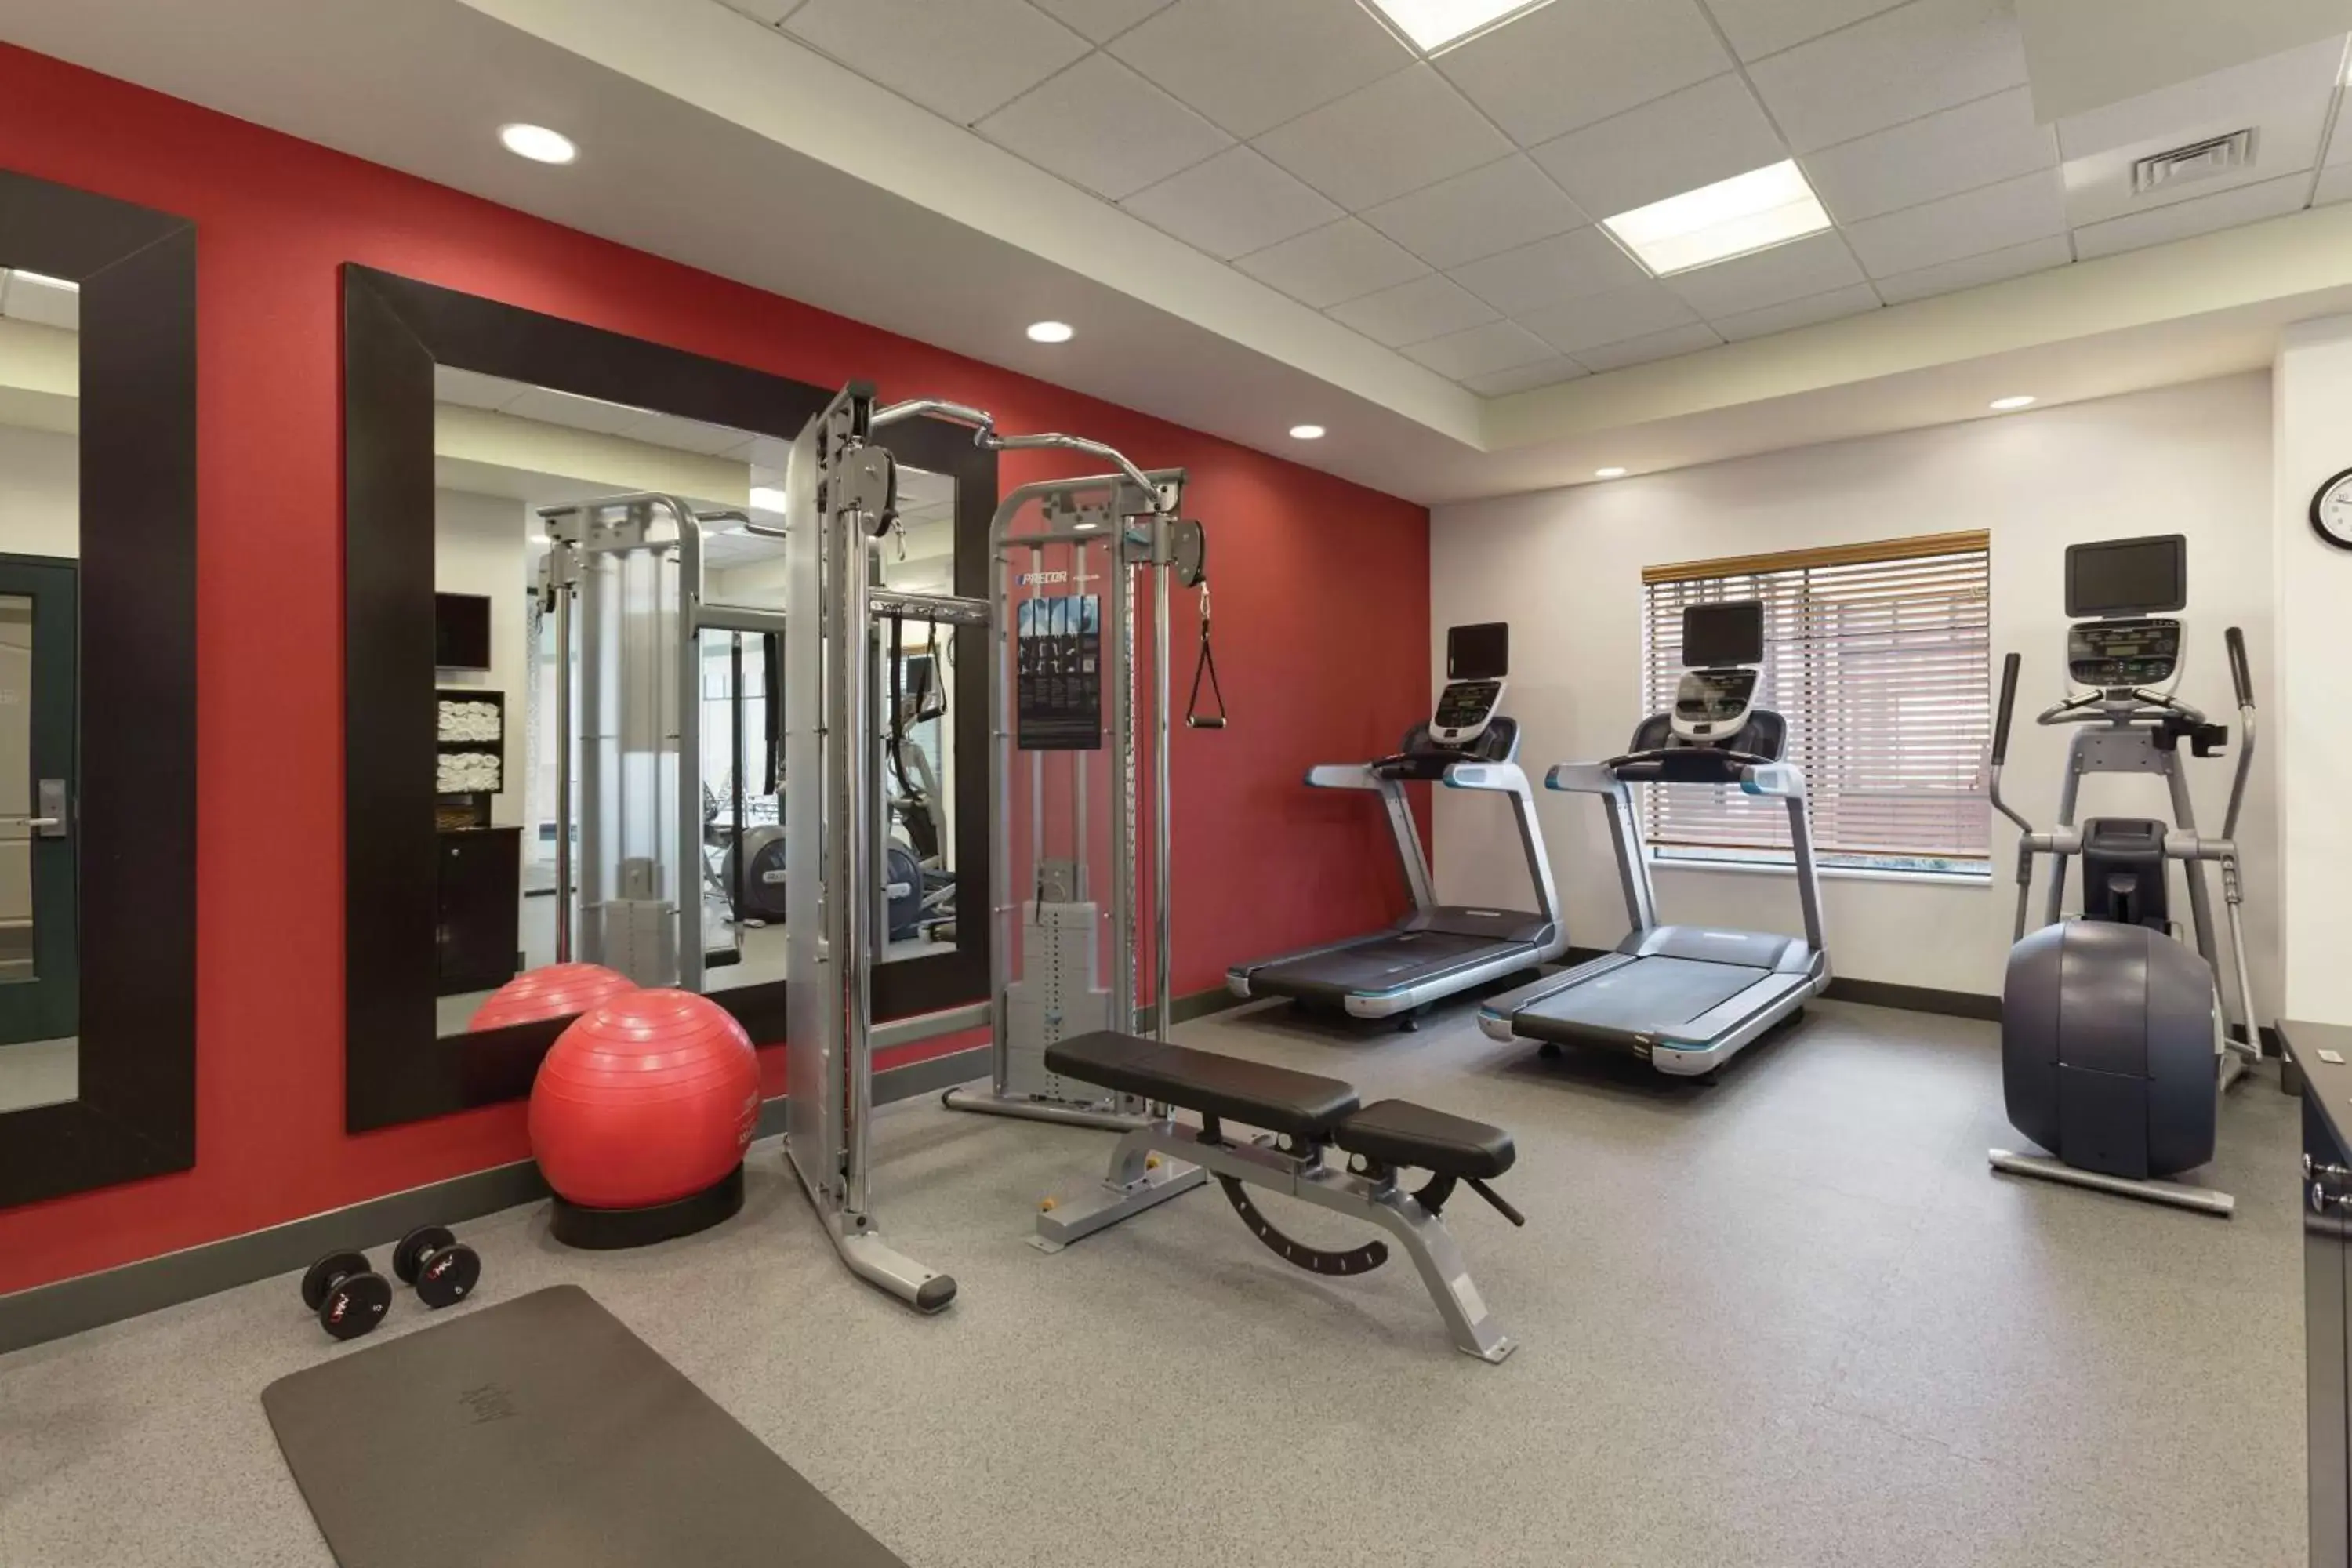 Fitness centre/facilities, Fitness Center/Facilities in Hilton Garden Inn Wallingford/Meriden